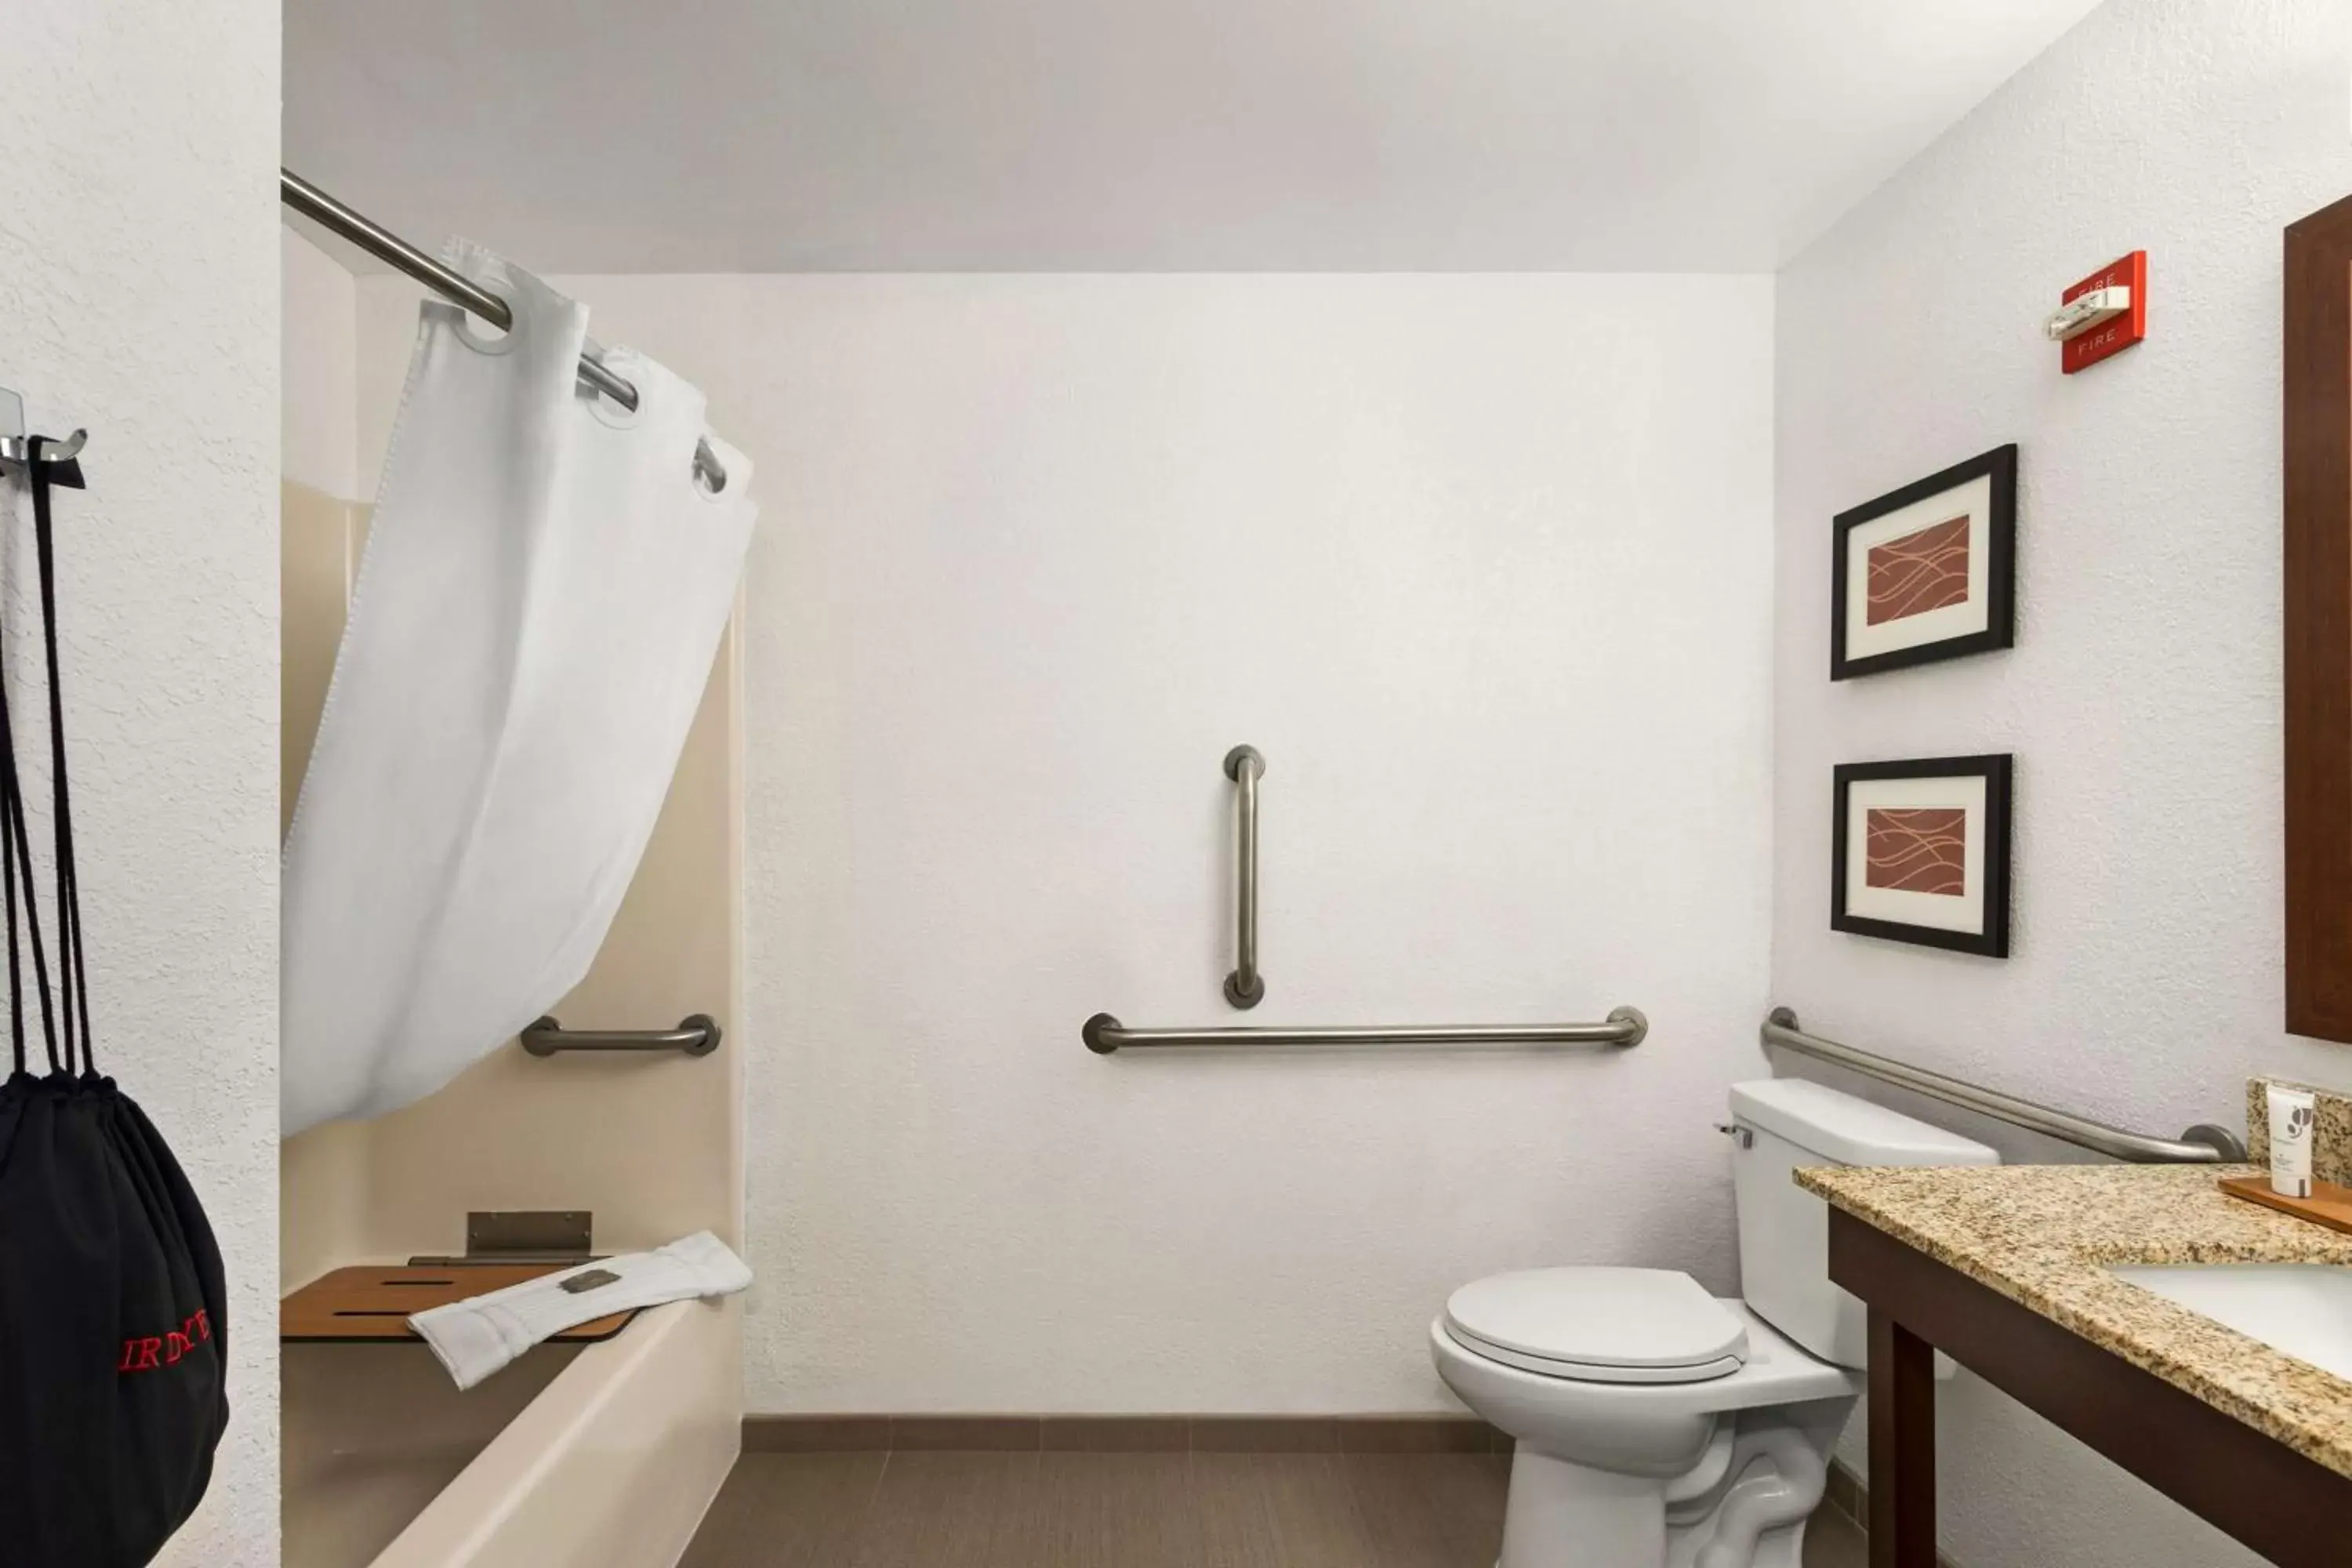 Bathroom in Country Inn & Suites by Radisson, Stillwater, MN